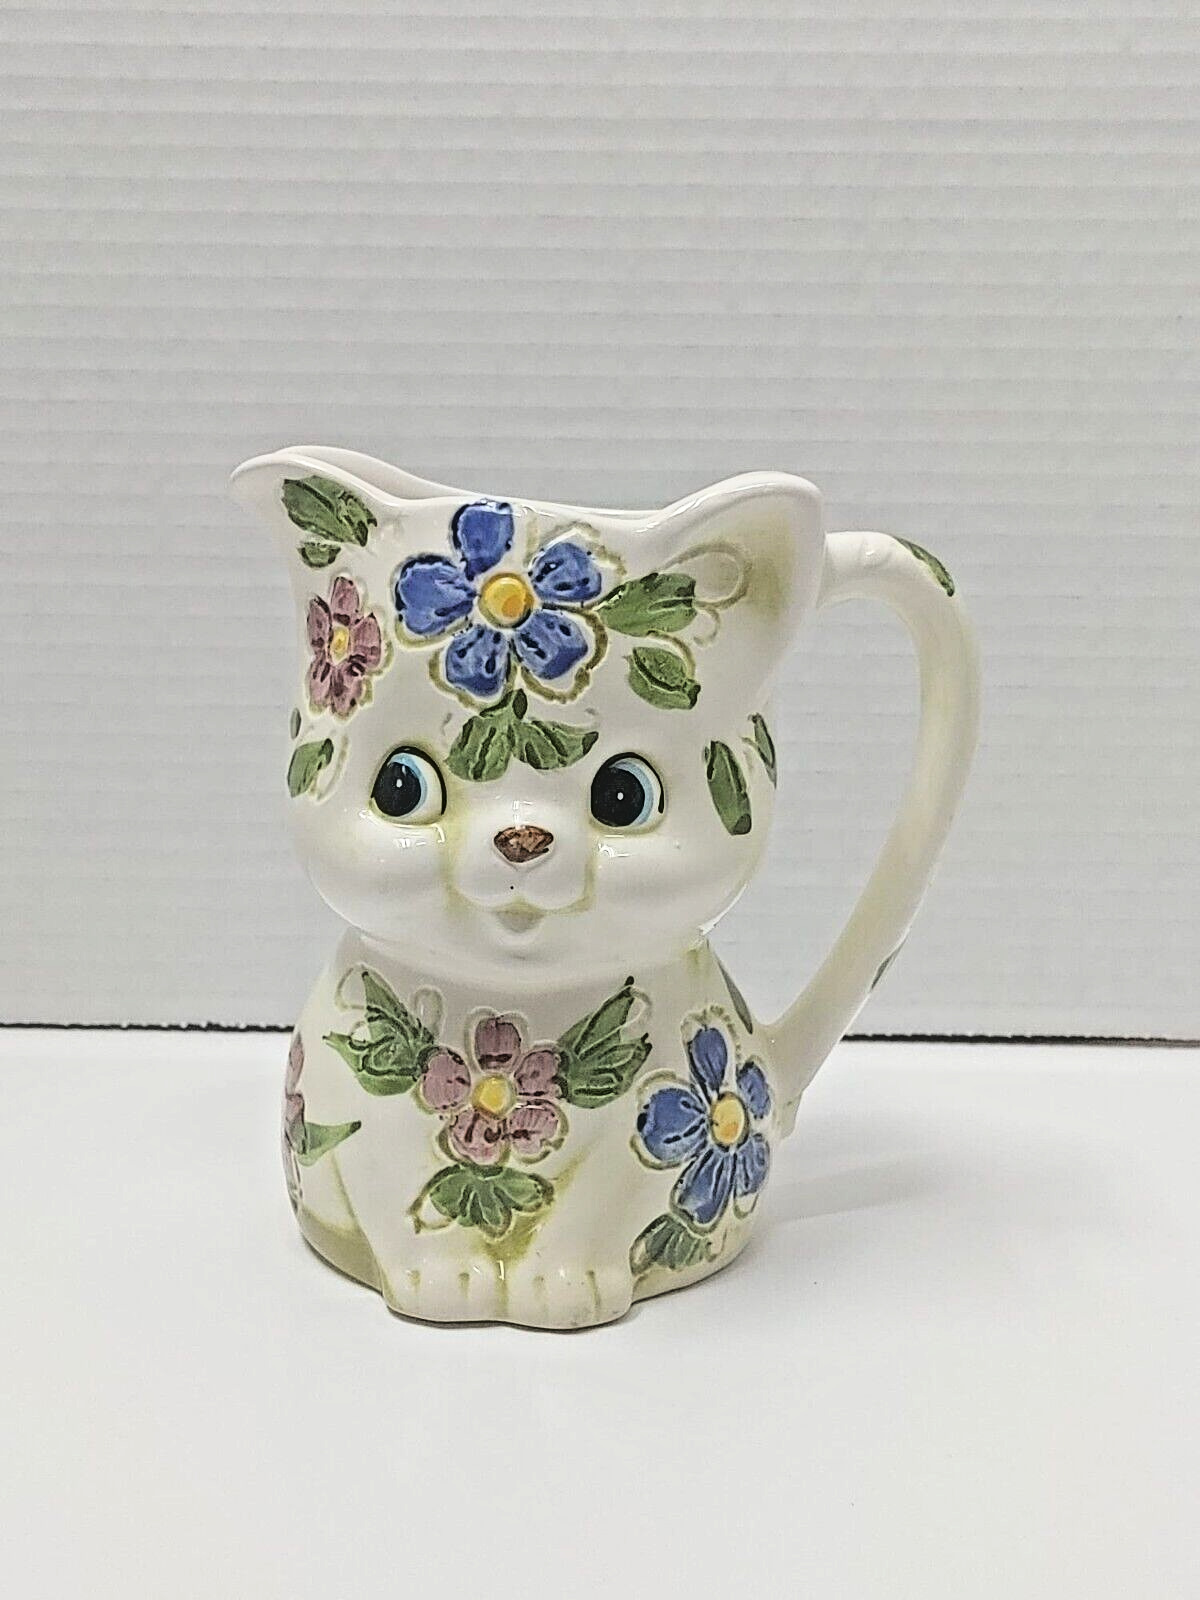 Vintage Cat Pitcher Relpo 6481 Ceramic Pitcher Collectible Handpainted